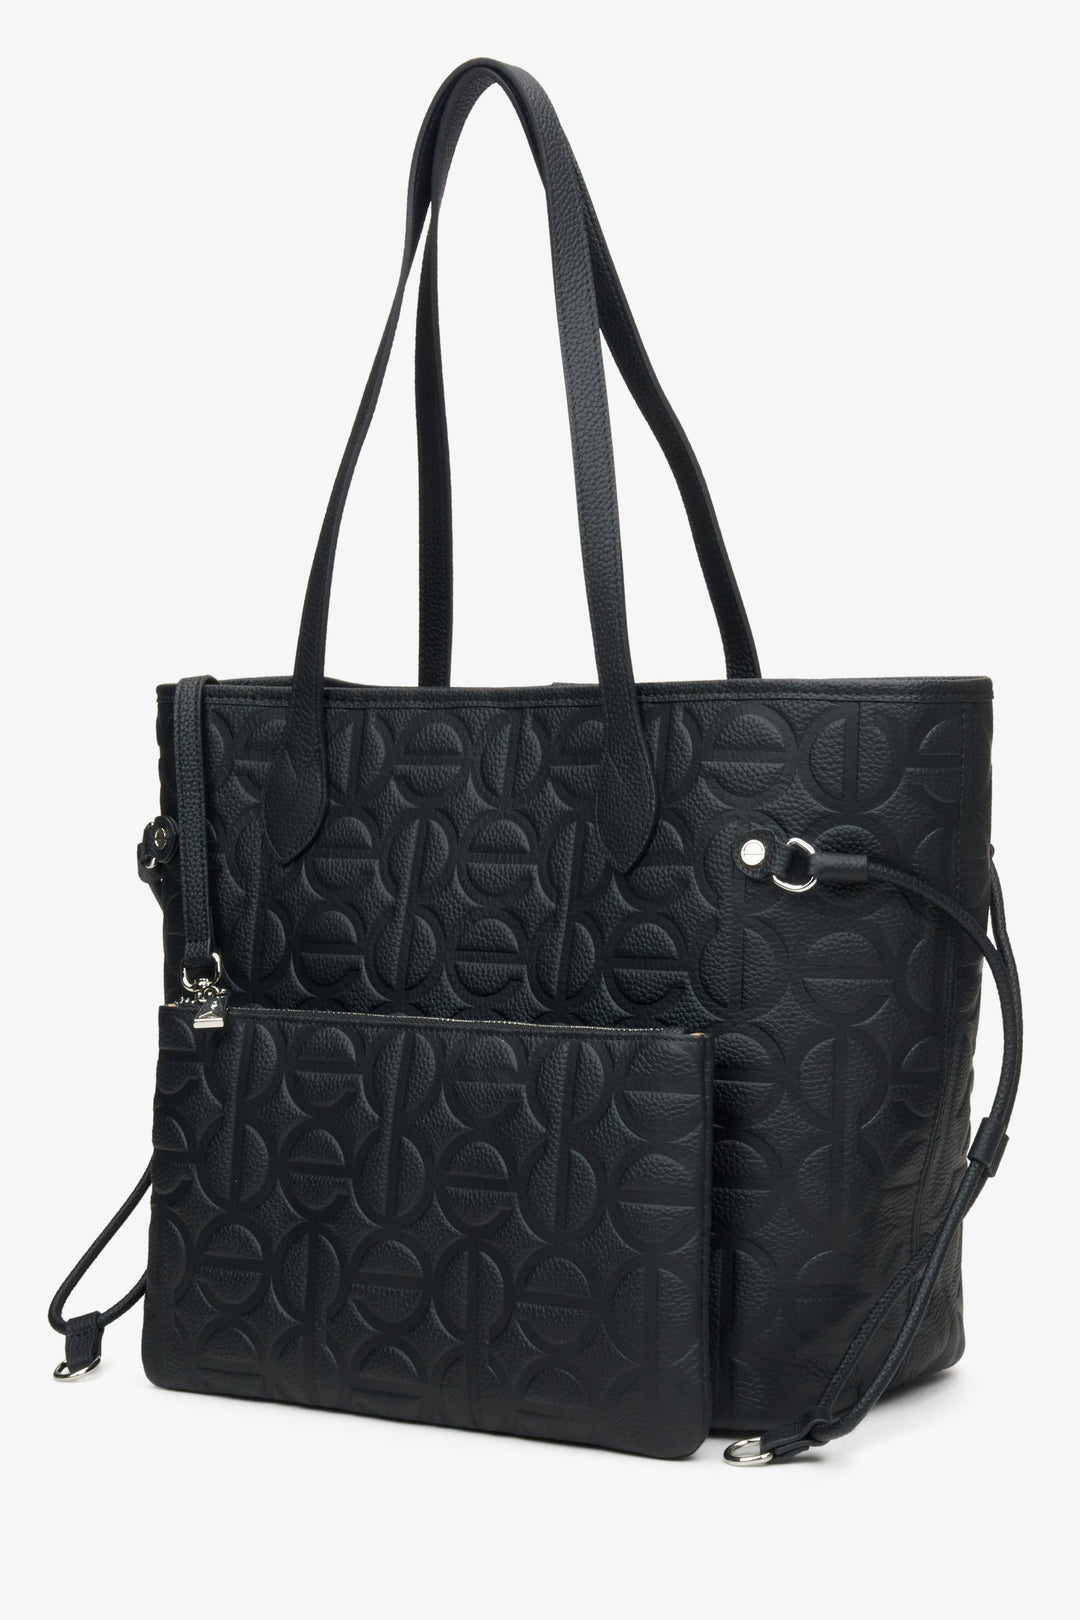 Women's black Estro shopper bag.